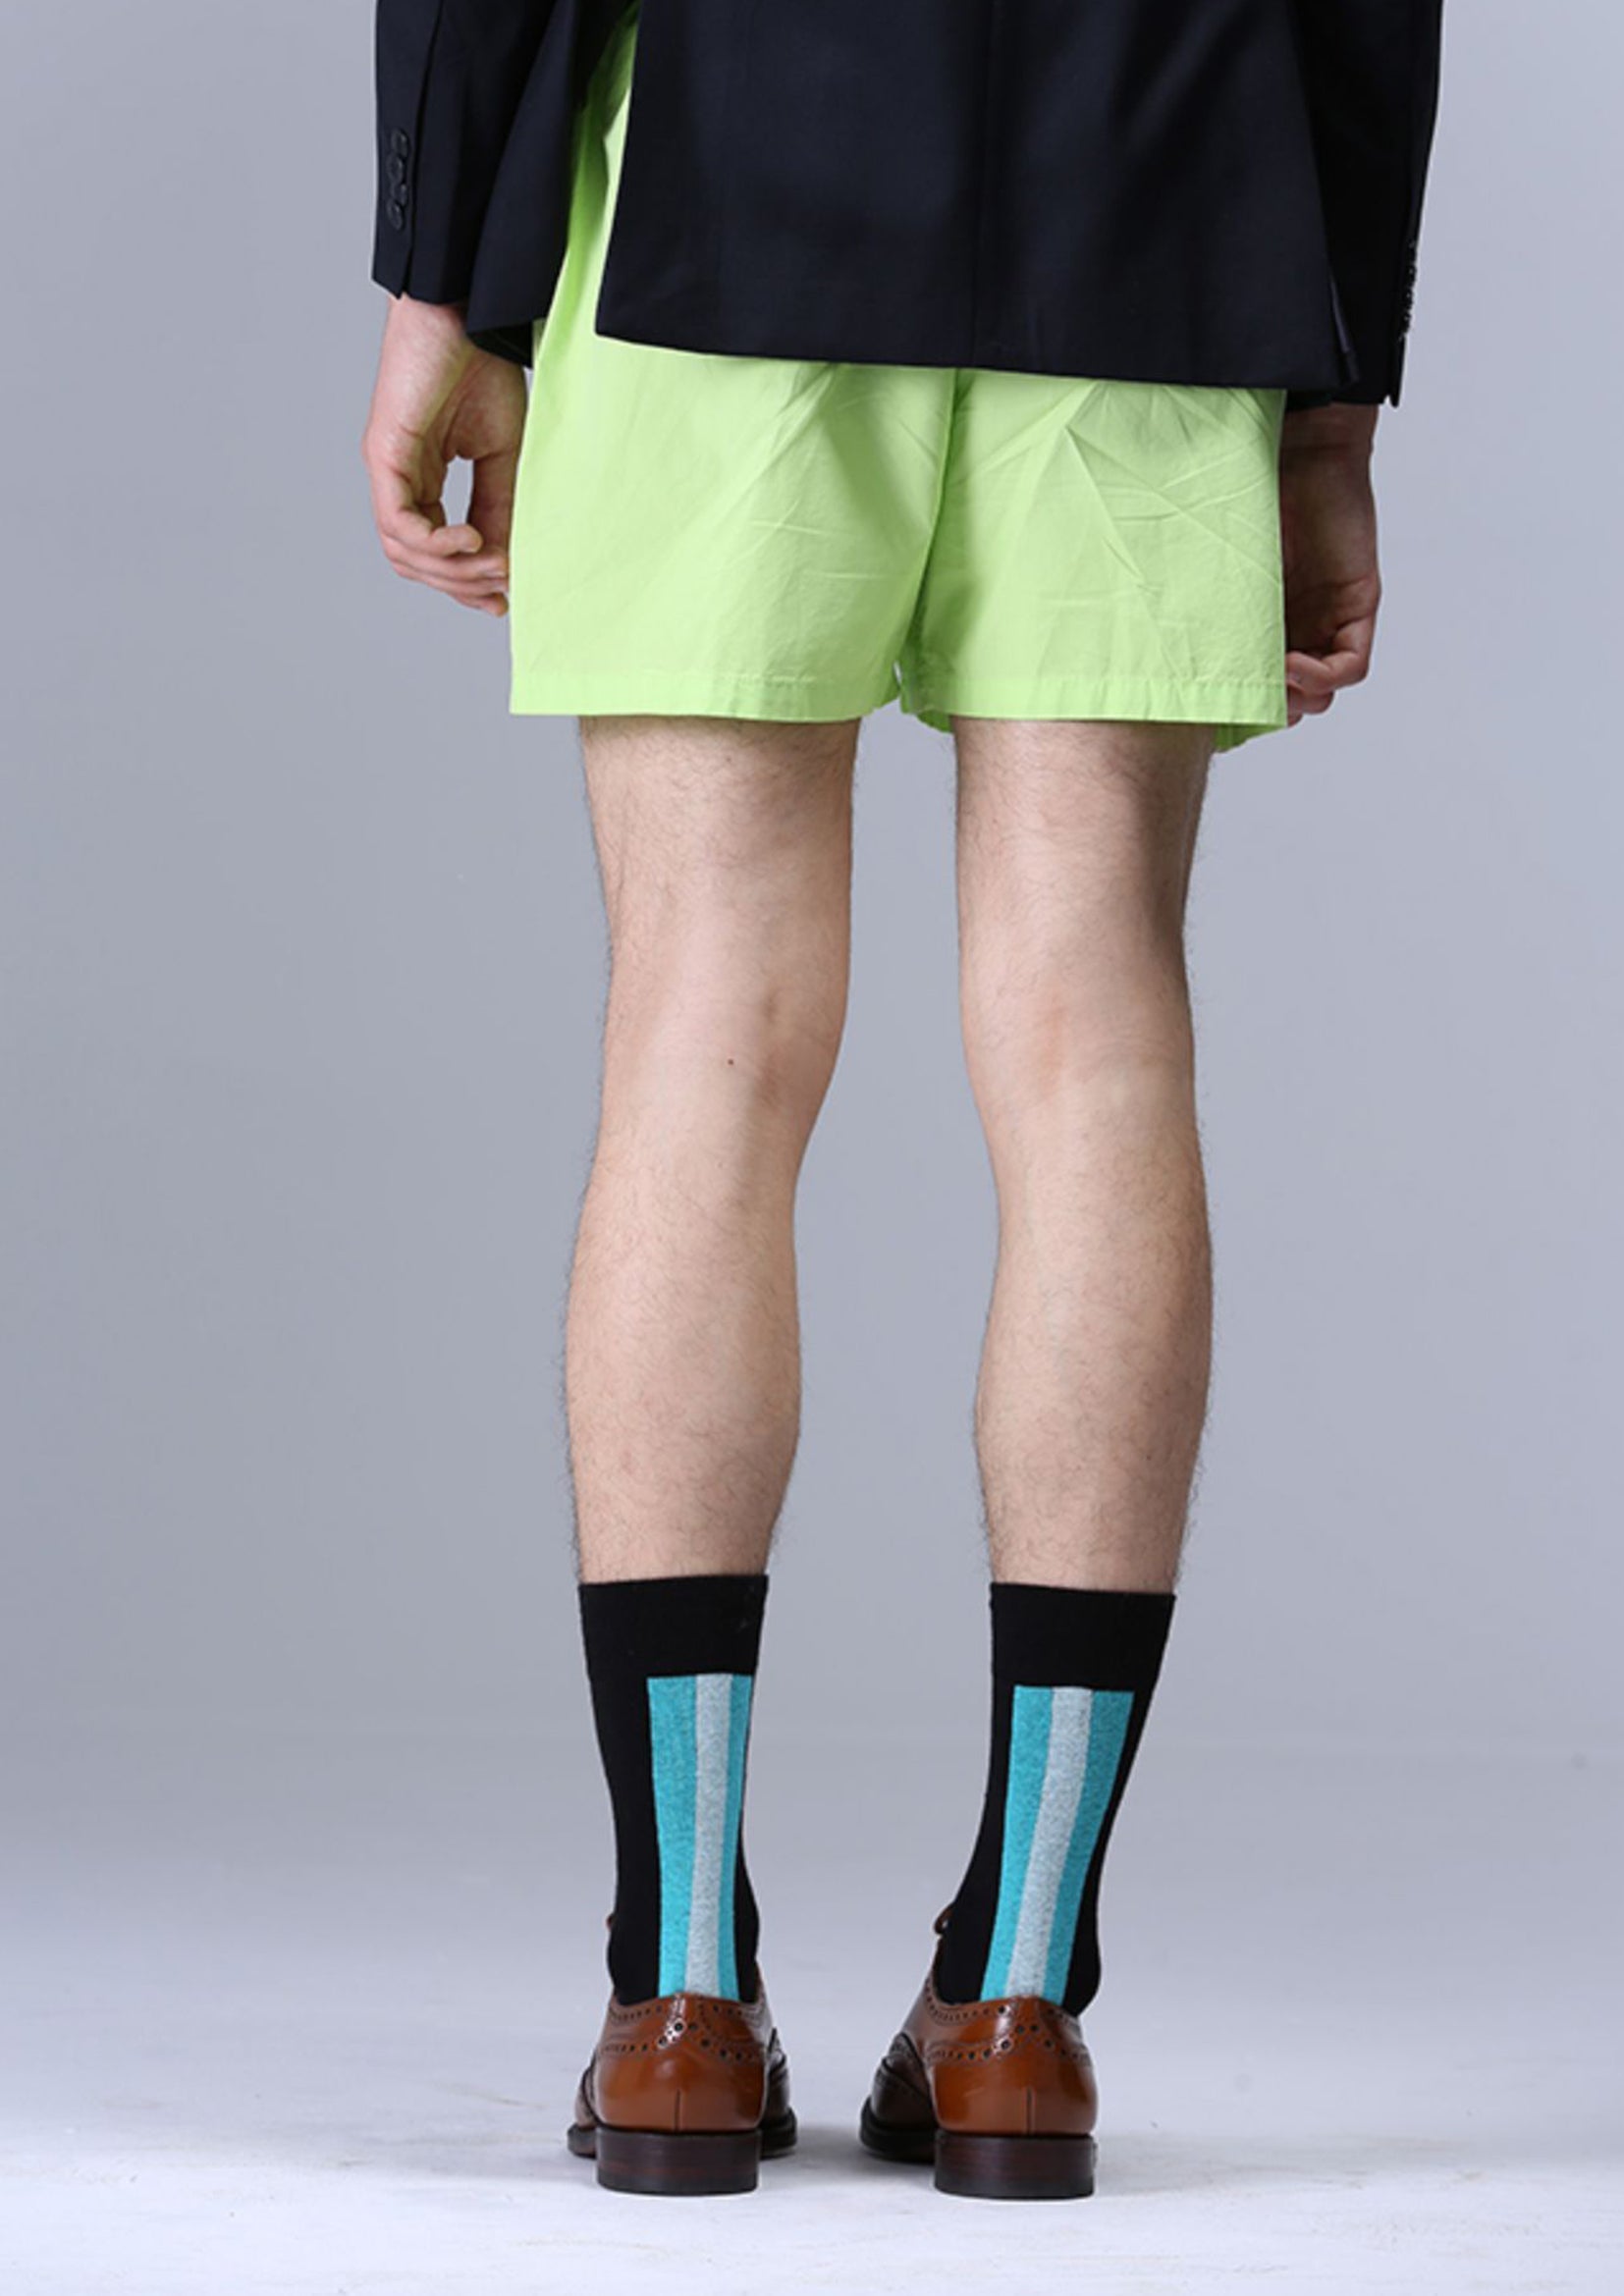 Colour collage mid-calf socks - green